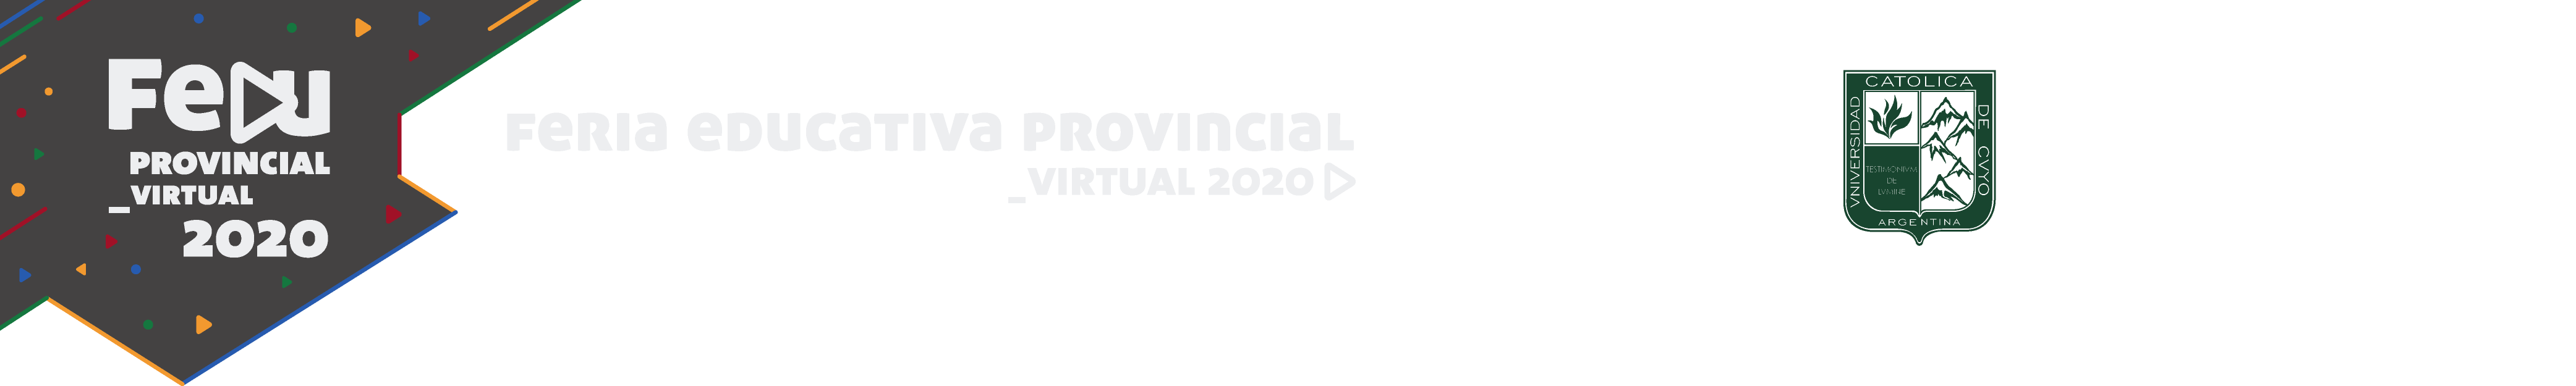 FERIA EDUCATIVA PROVINCIAL VIRTUAL 2020